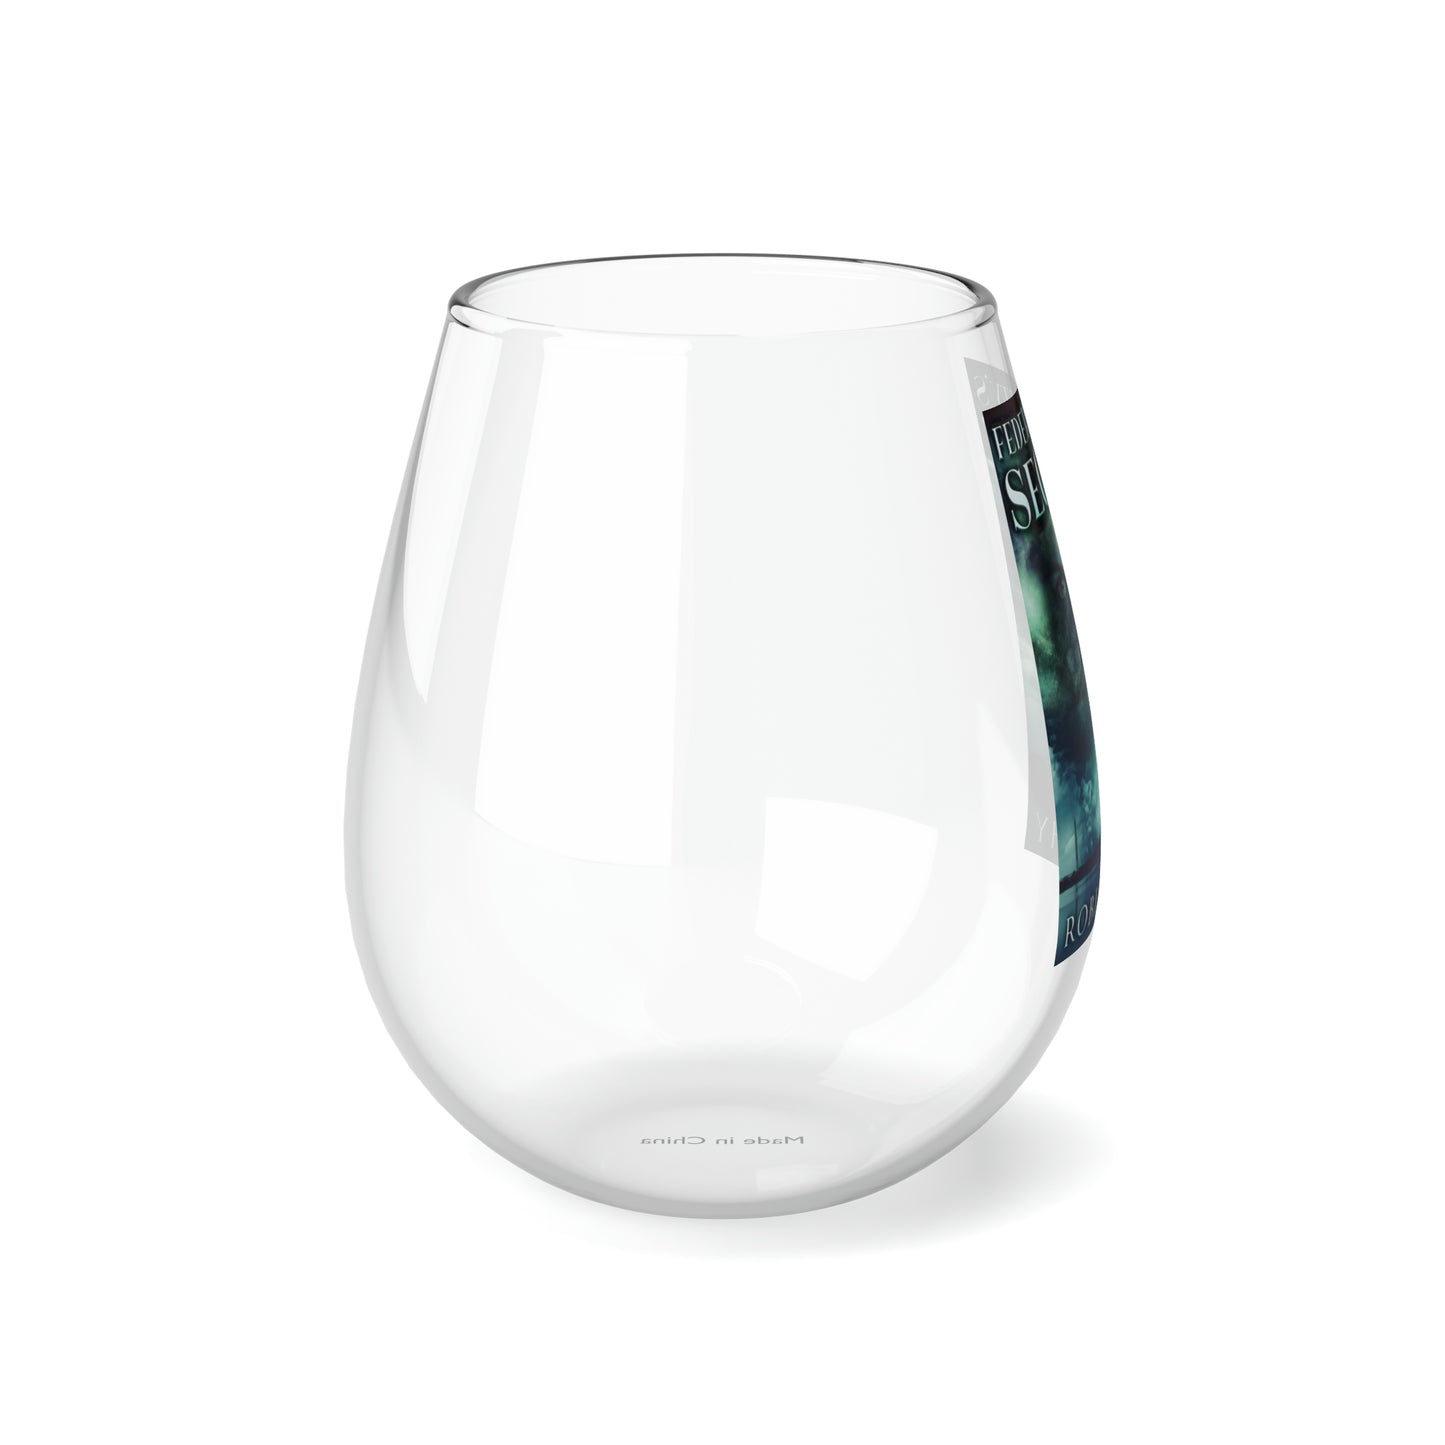 Federal City's Secret - Stemless Wine Glass, 11.75oz